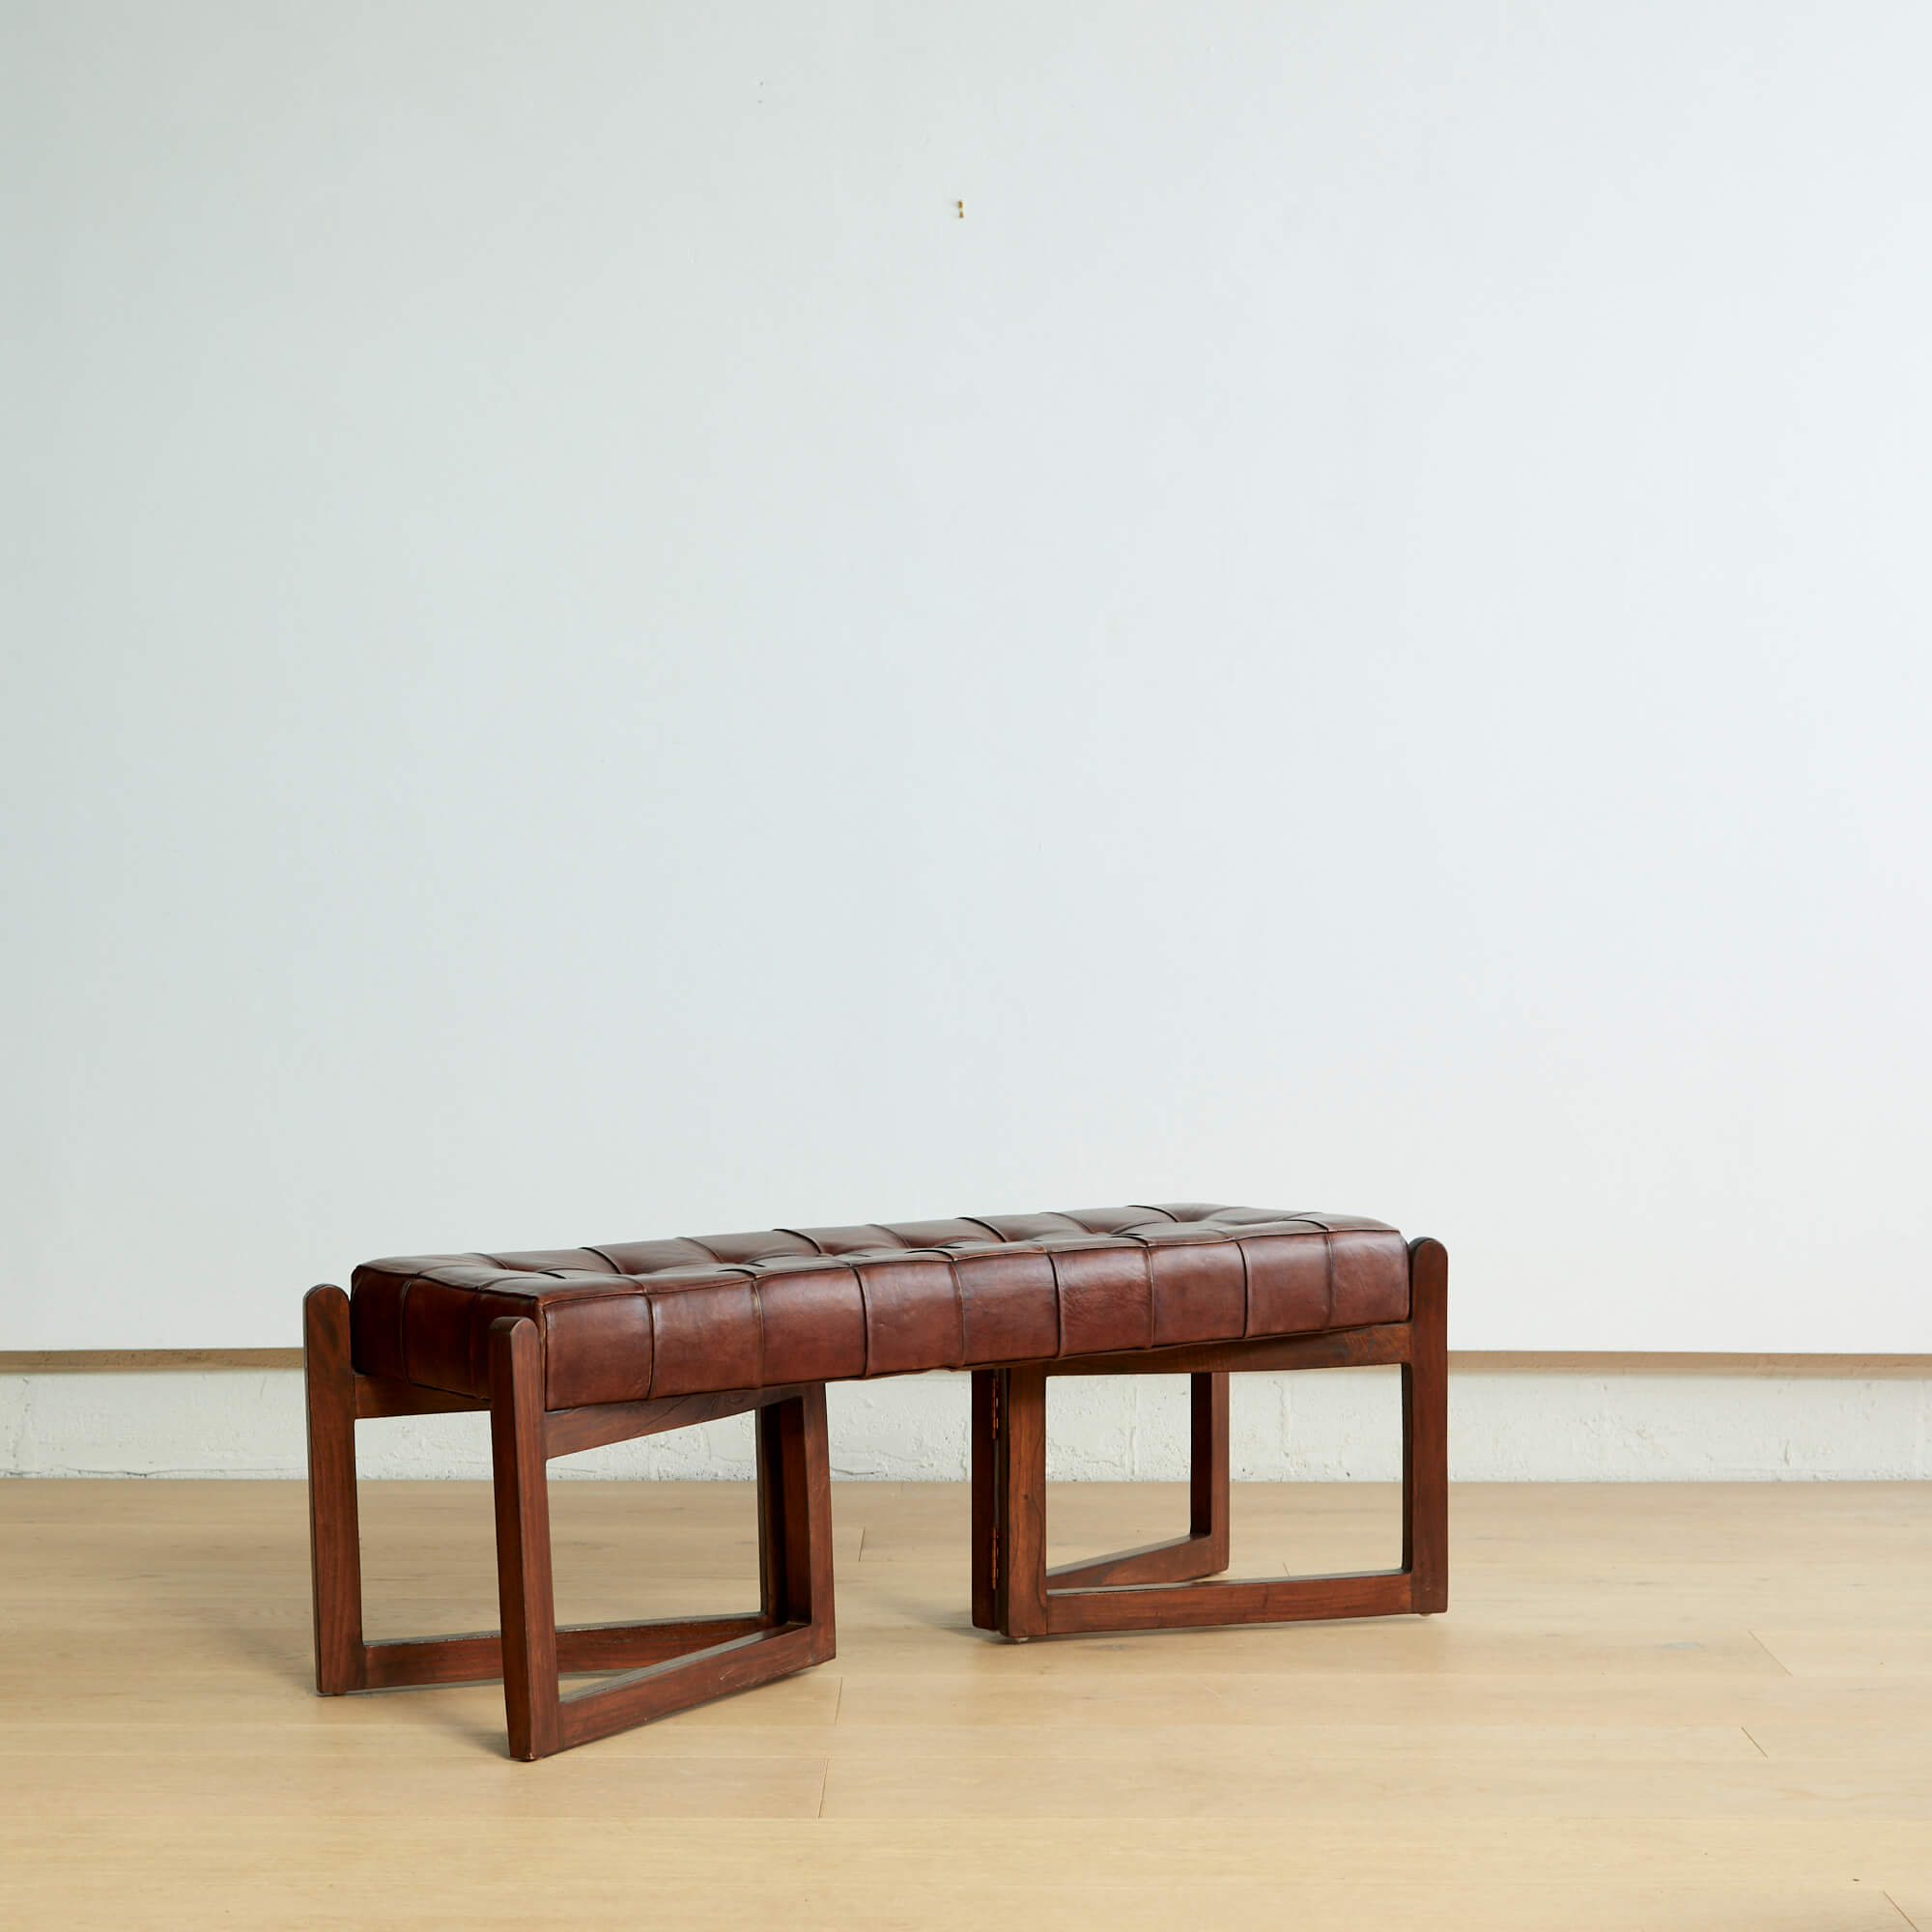 Tufted Leather Bench by Olivier de Schrijver